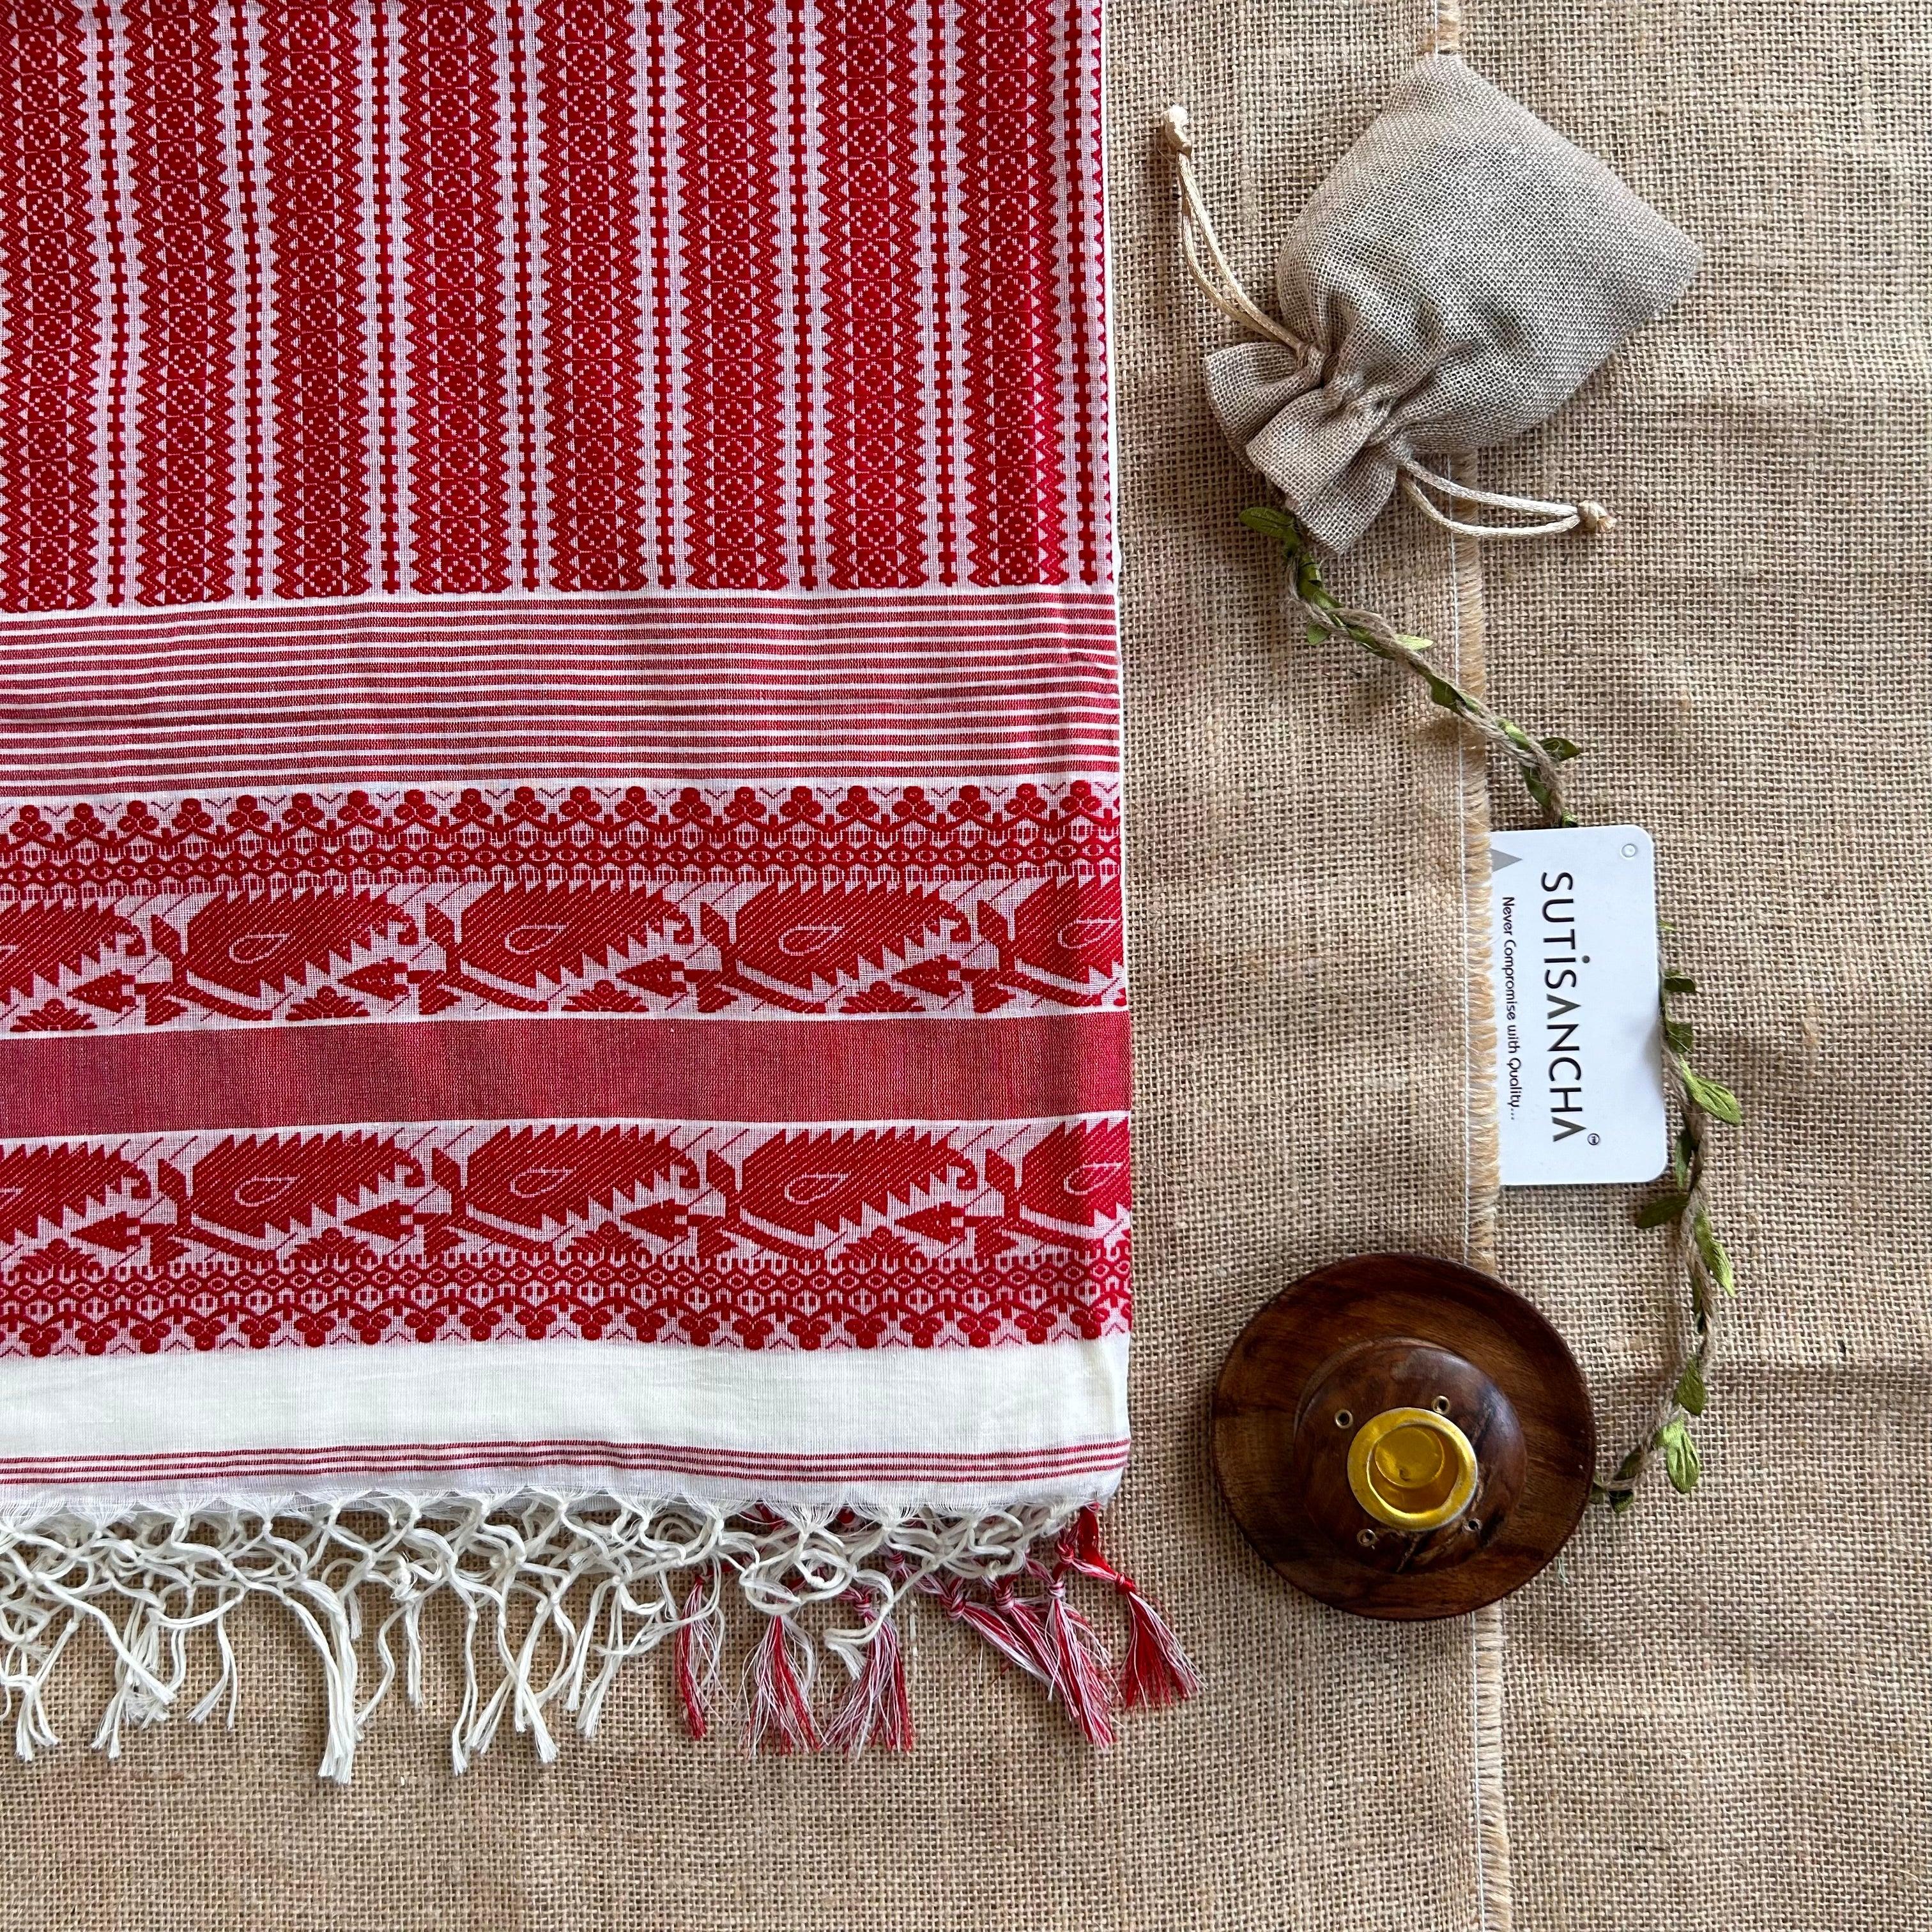 Pure Handloom Cotton Off-white jamdani Weaving saree - Suti Sancha